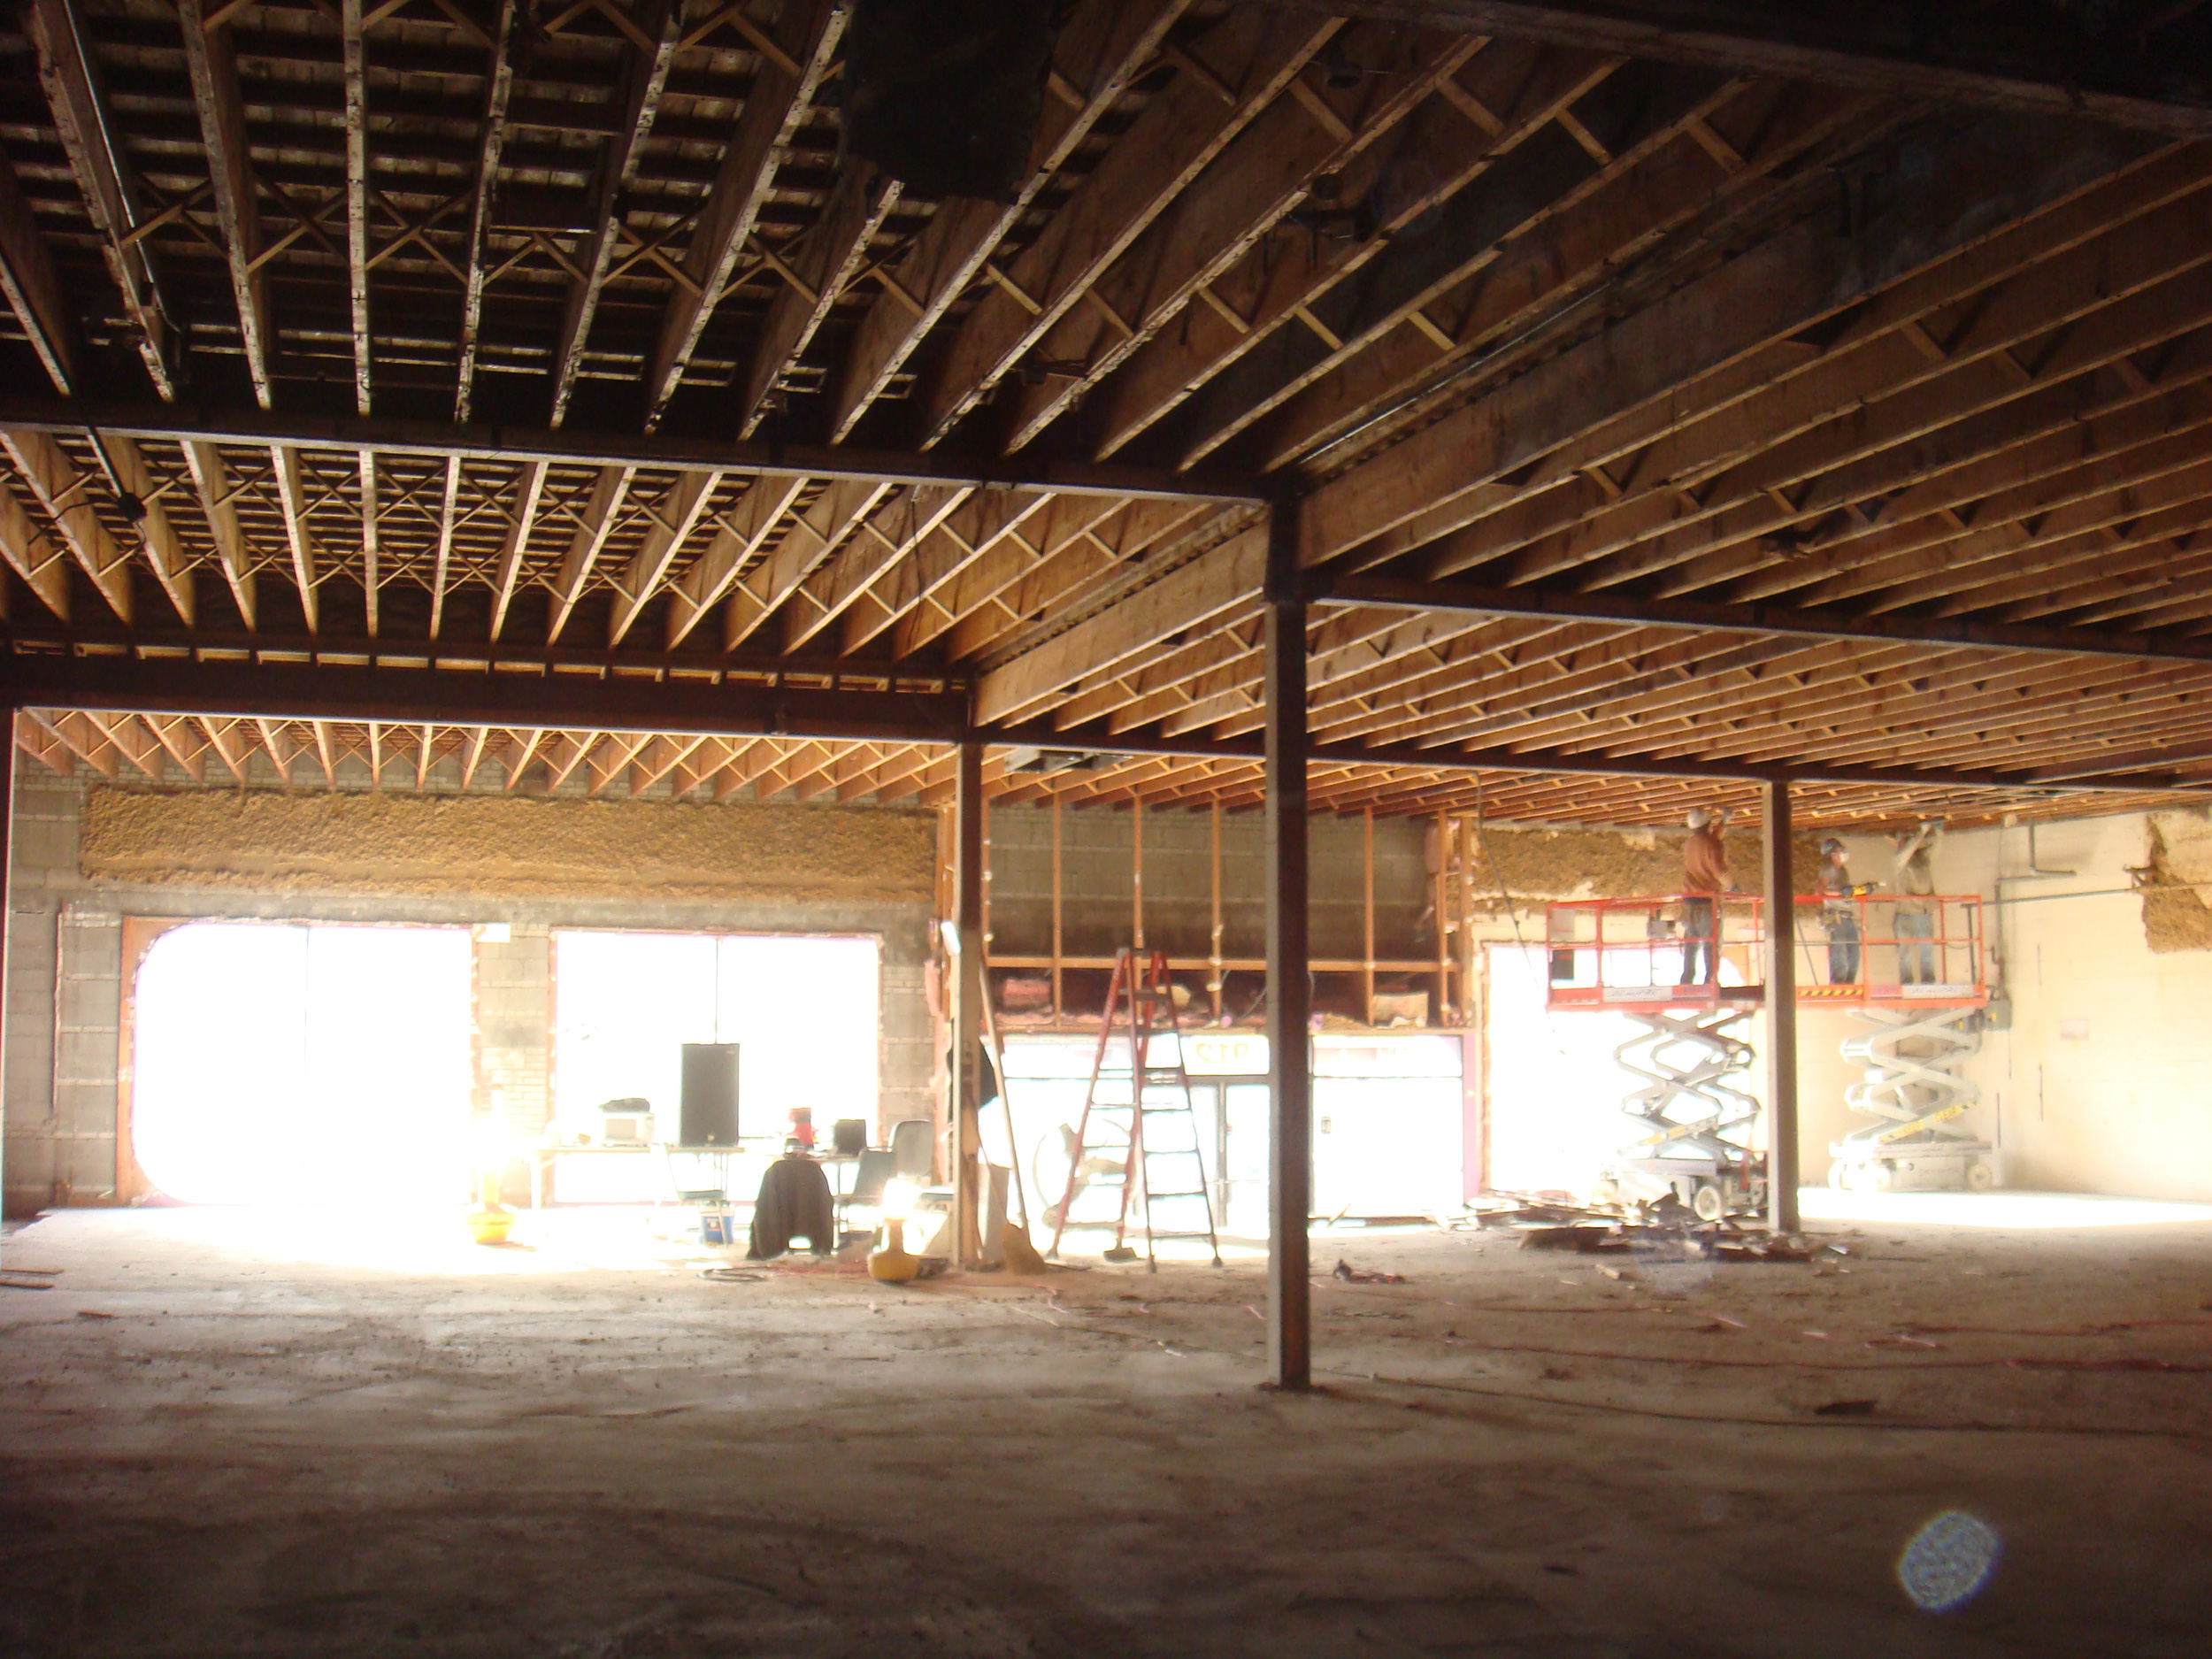 Interior of 912 West Lake location after demolition